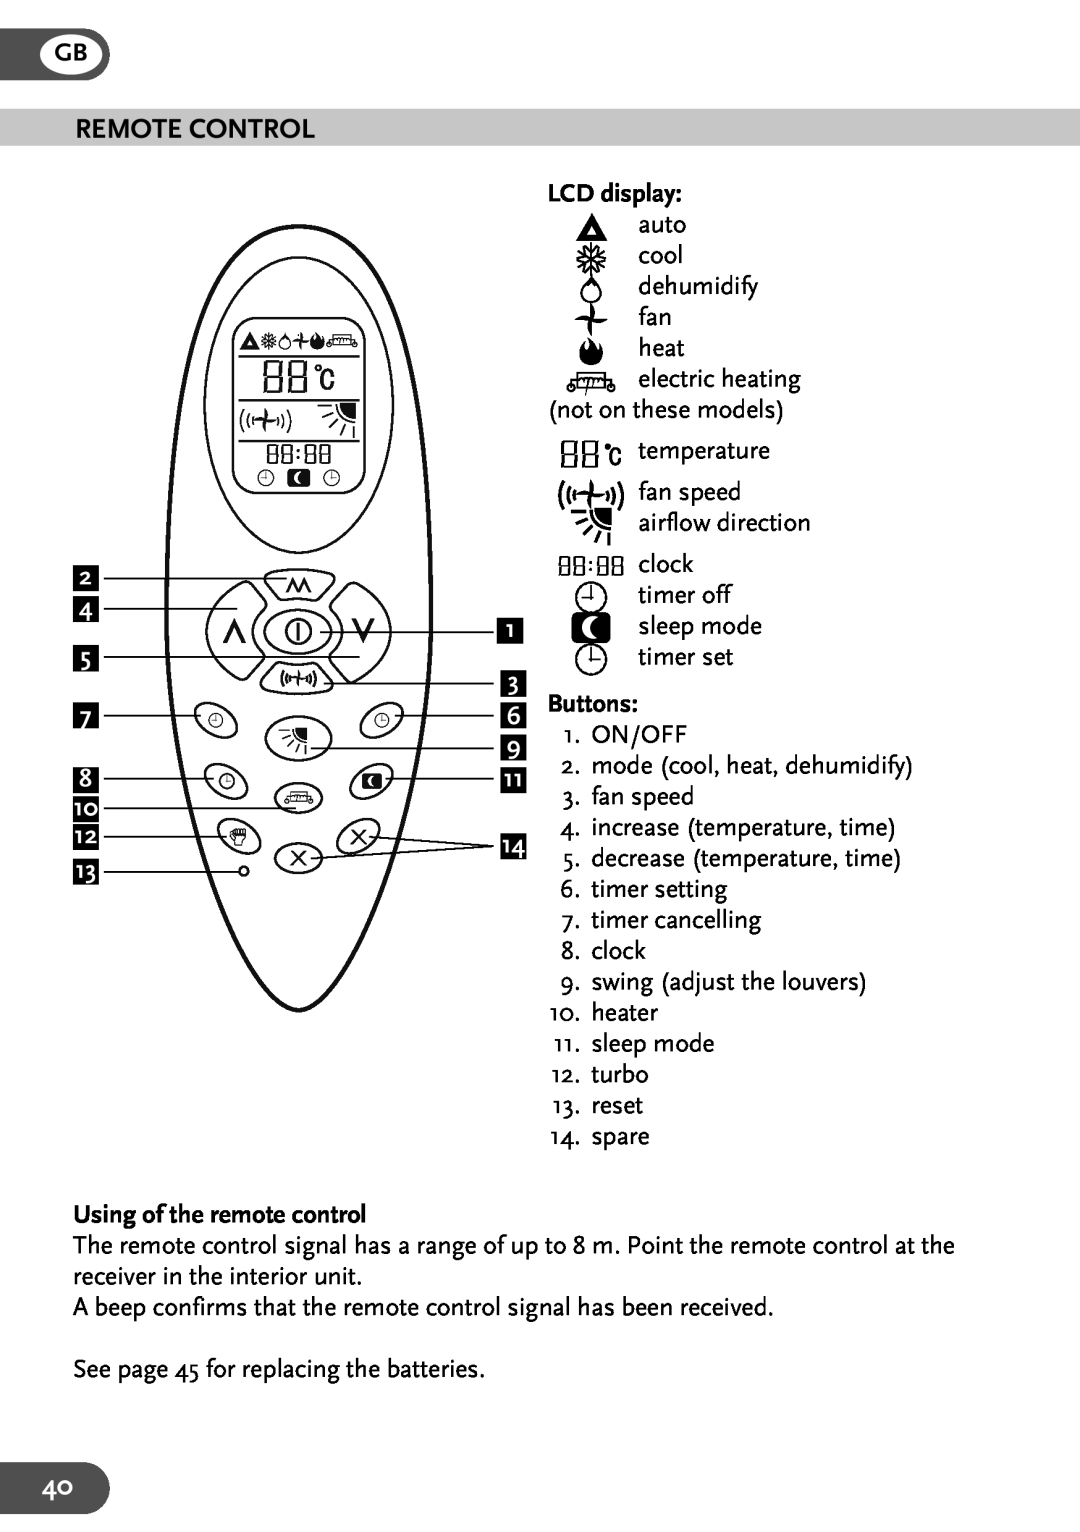 Amcor HWAM12KE, HWAM9KE, HW9KE, HW12KE user manual Remote Control, Buttons, Using of the remote control, LCD display 